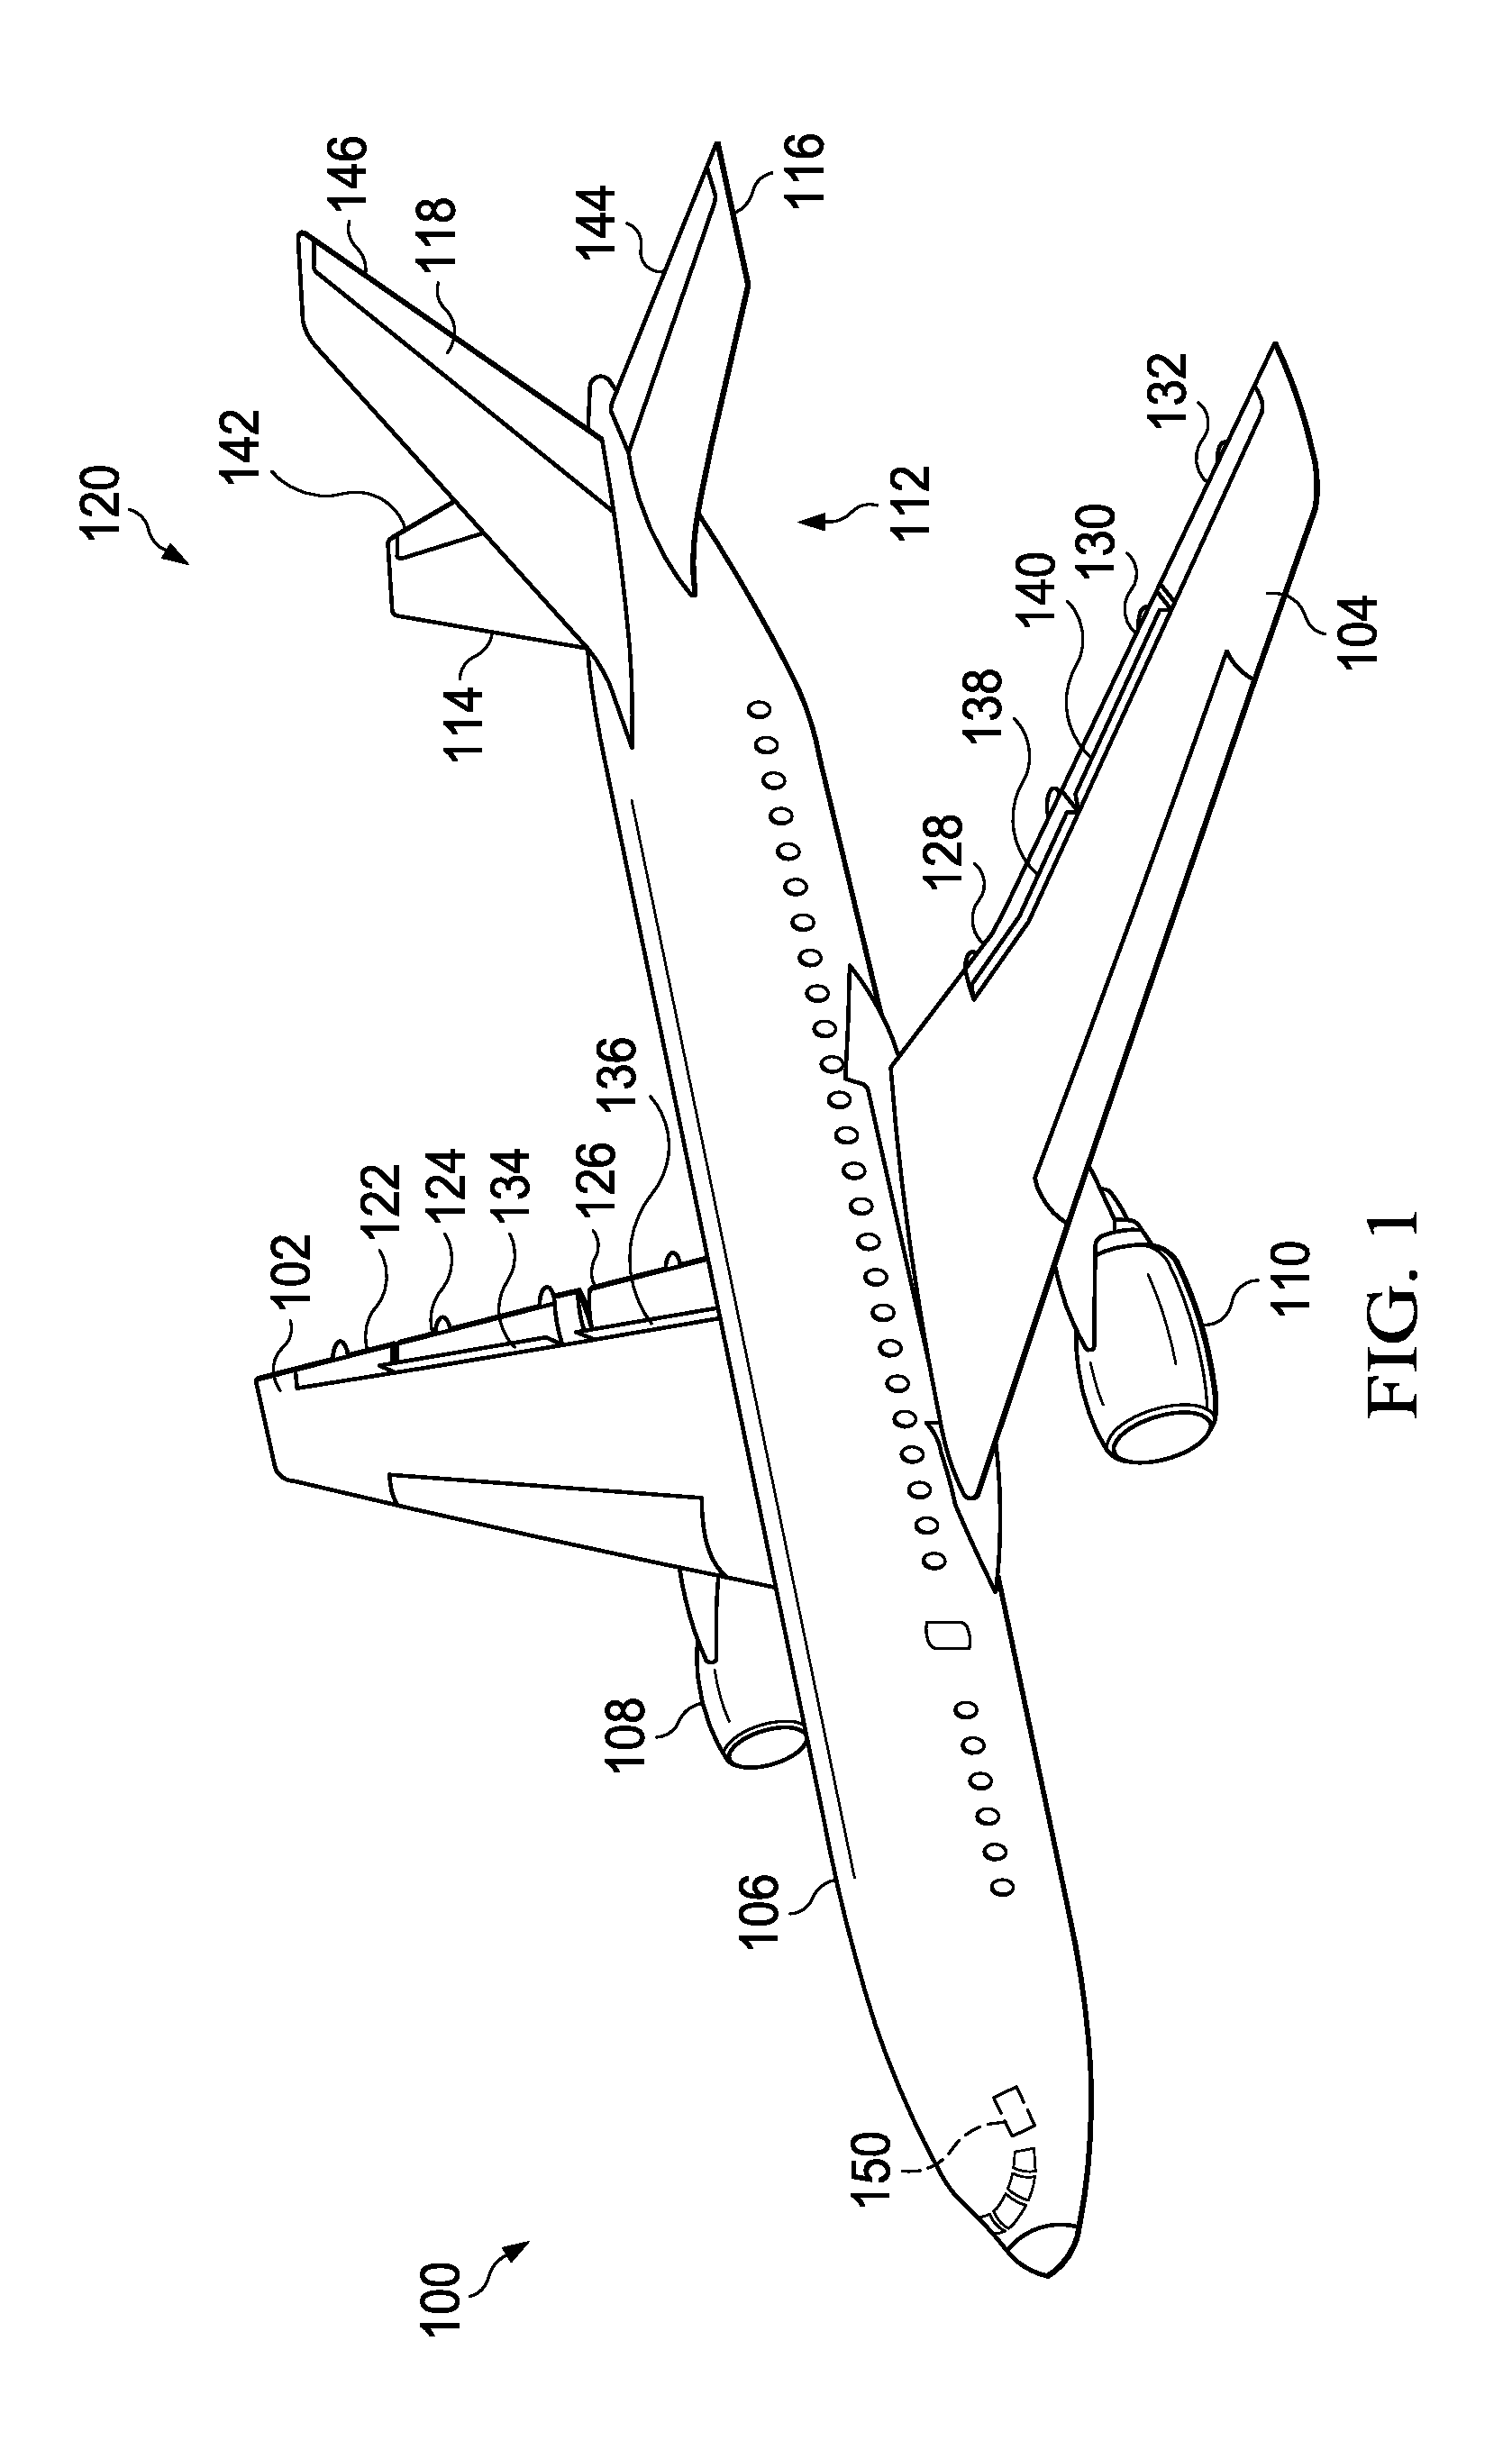 Auto-Flight System Pilot Interface